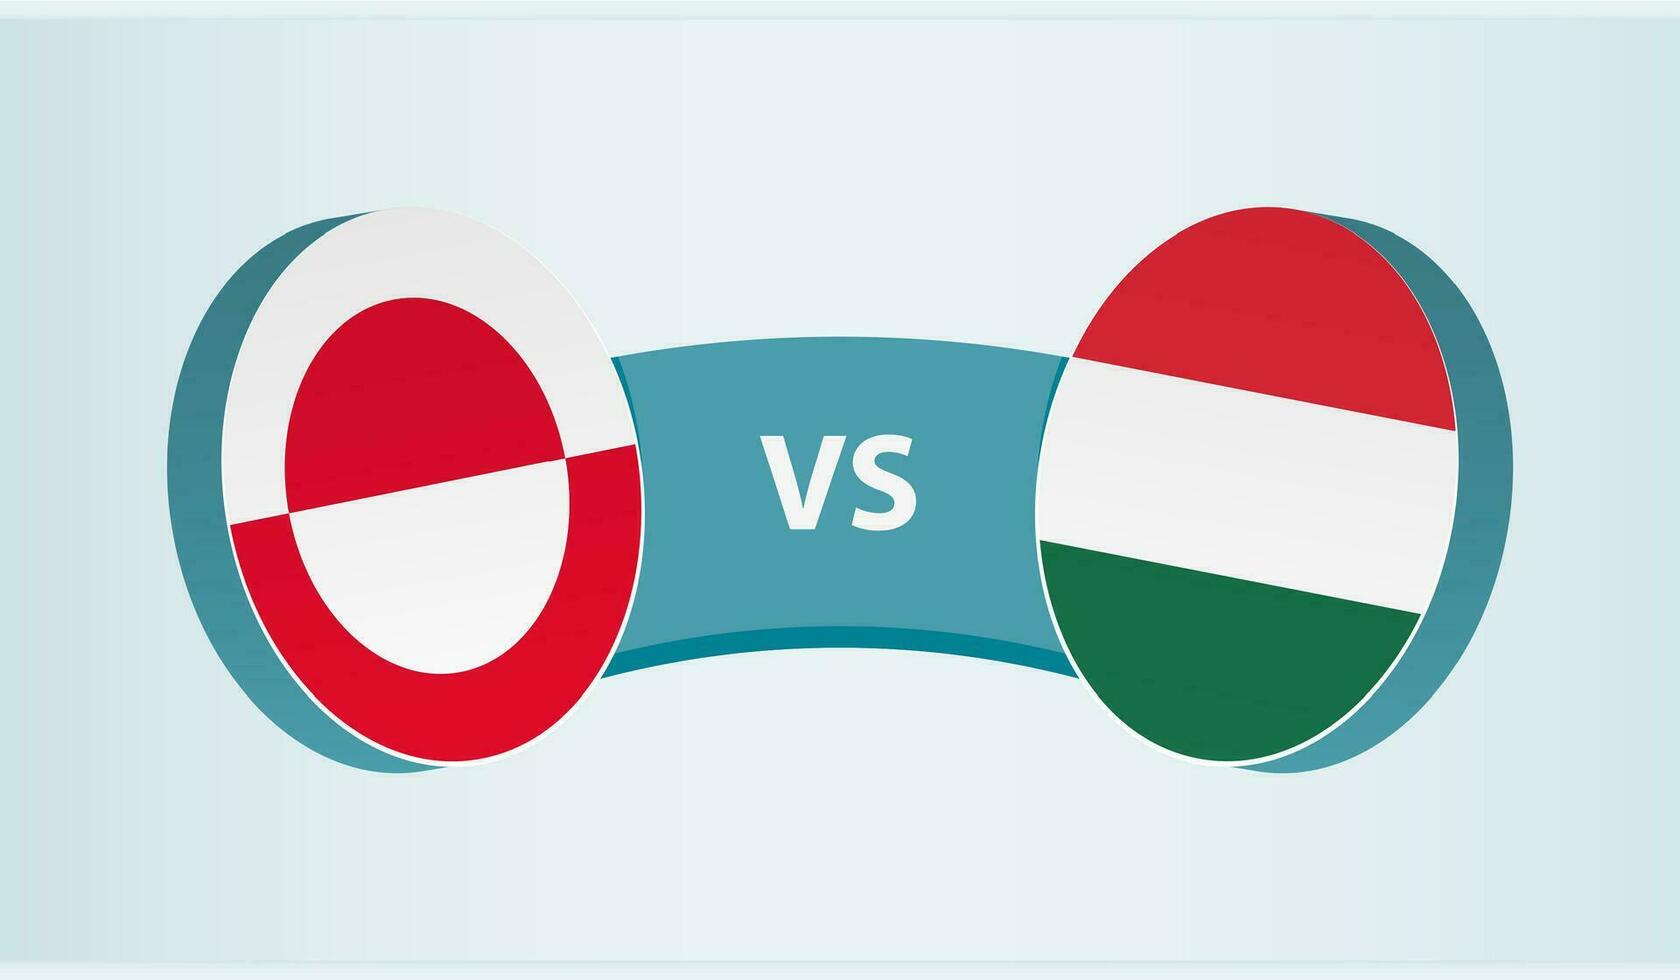 Grönland mot Ungern, team sporter konkurrens begrepp. vektor